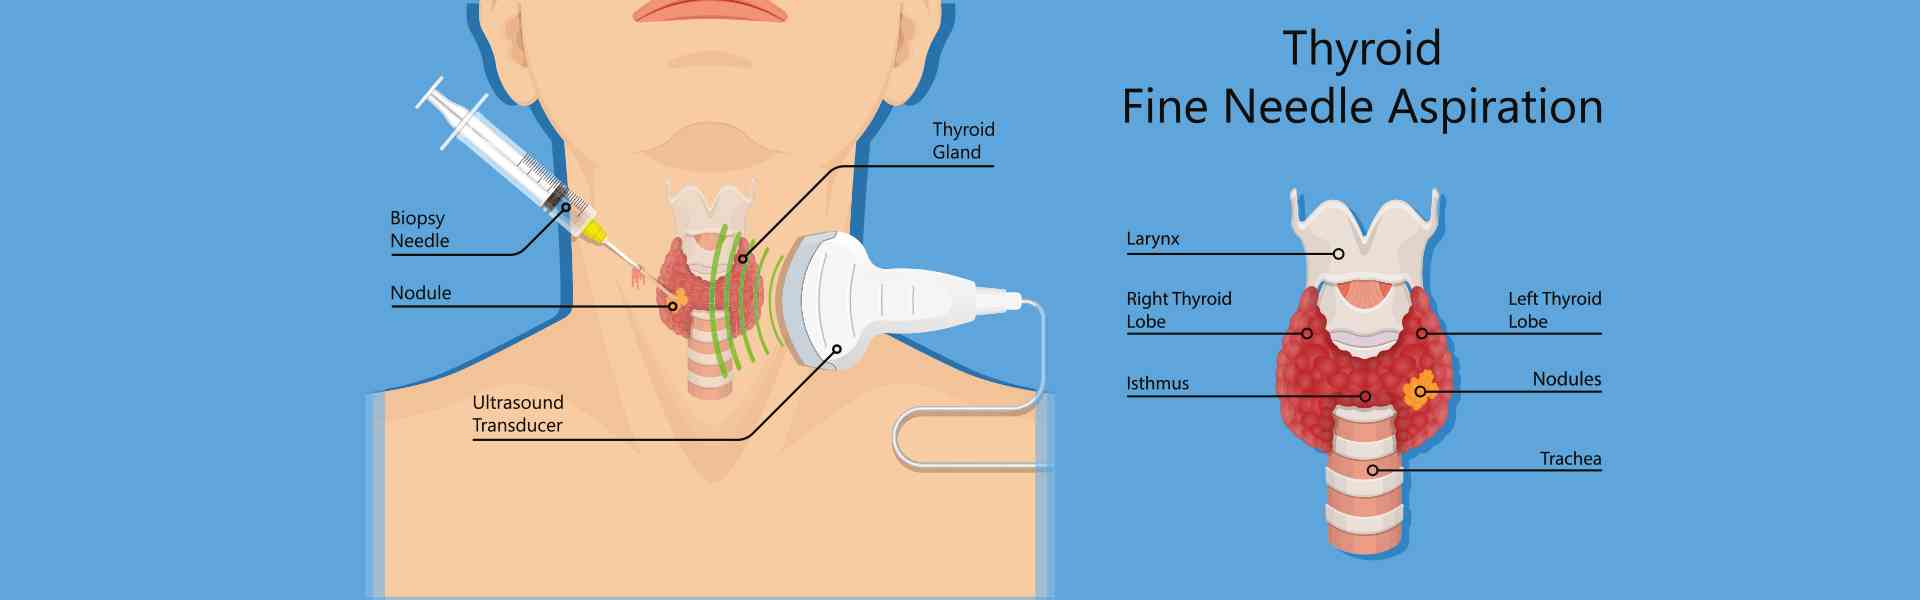 Fine Needle Aspiration Cytology Procedure 